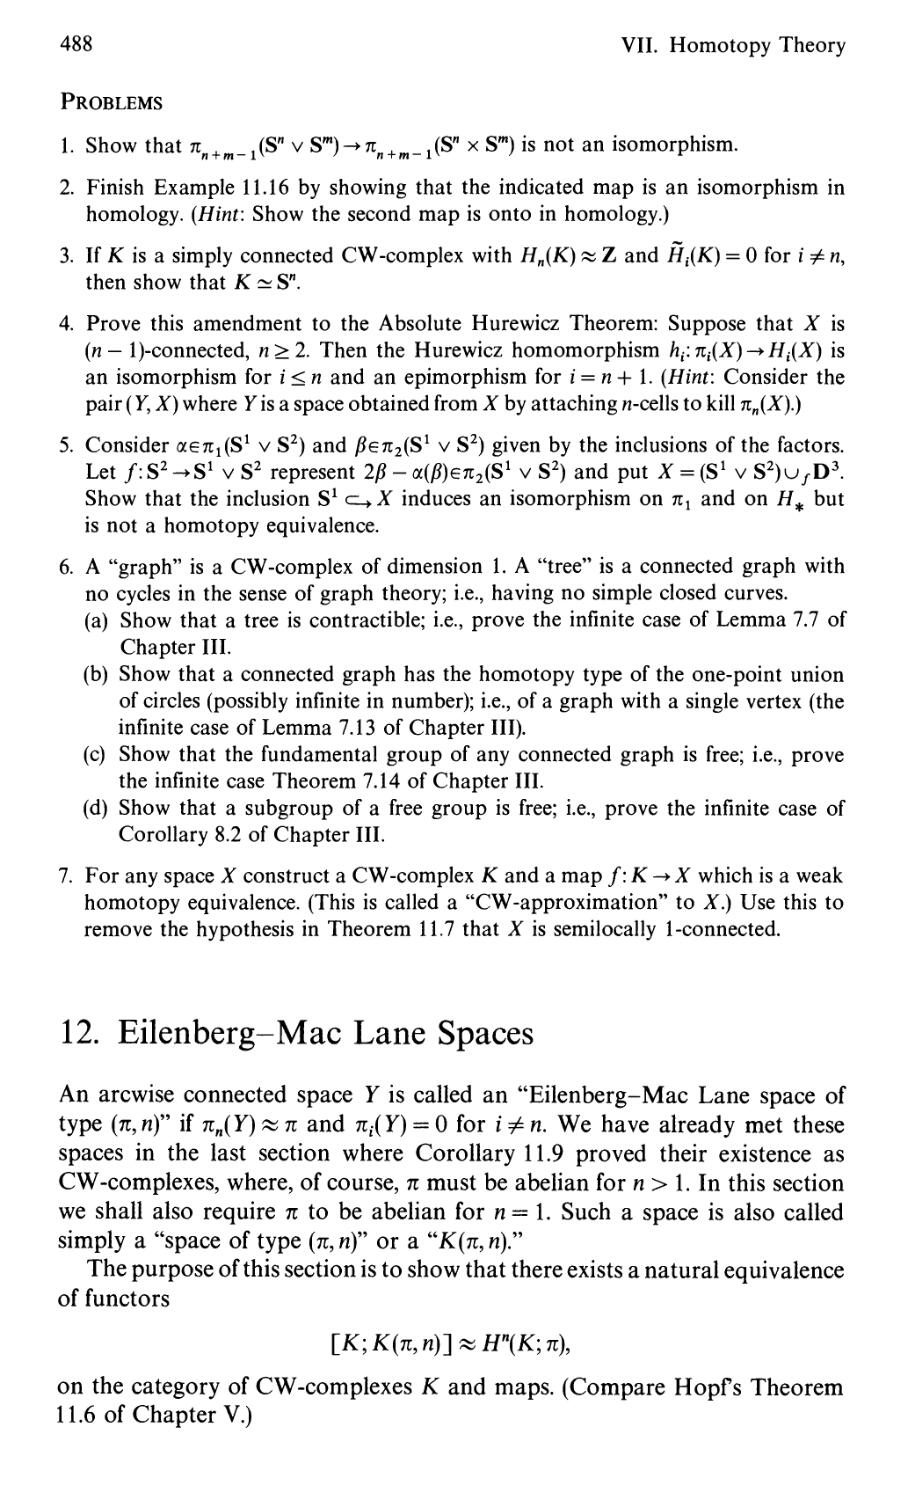 12. Eilenberg-Mac Lane Spaces